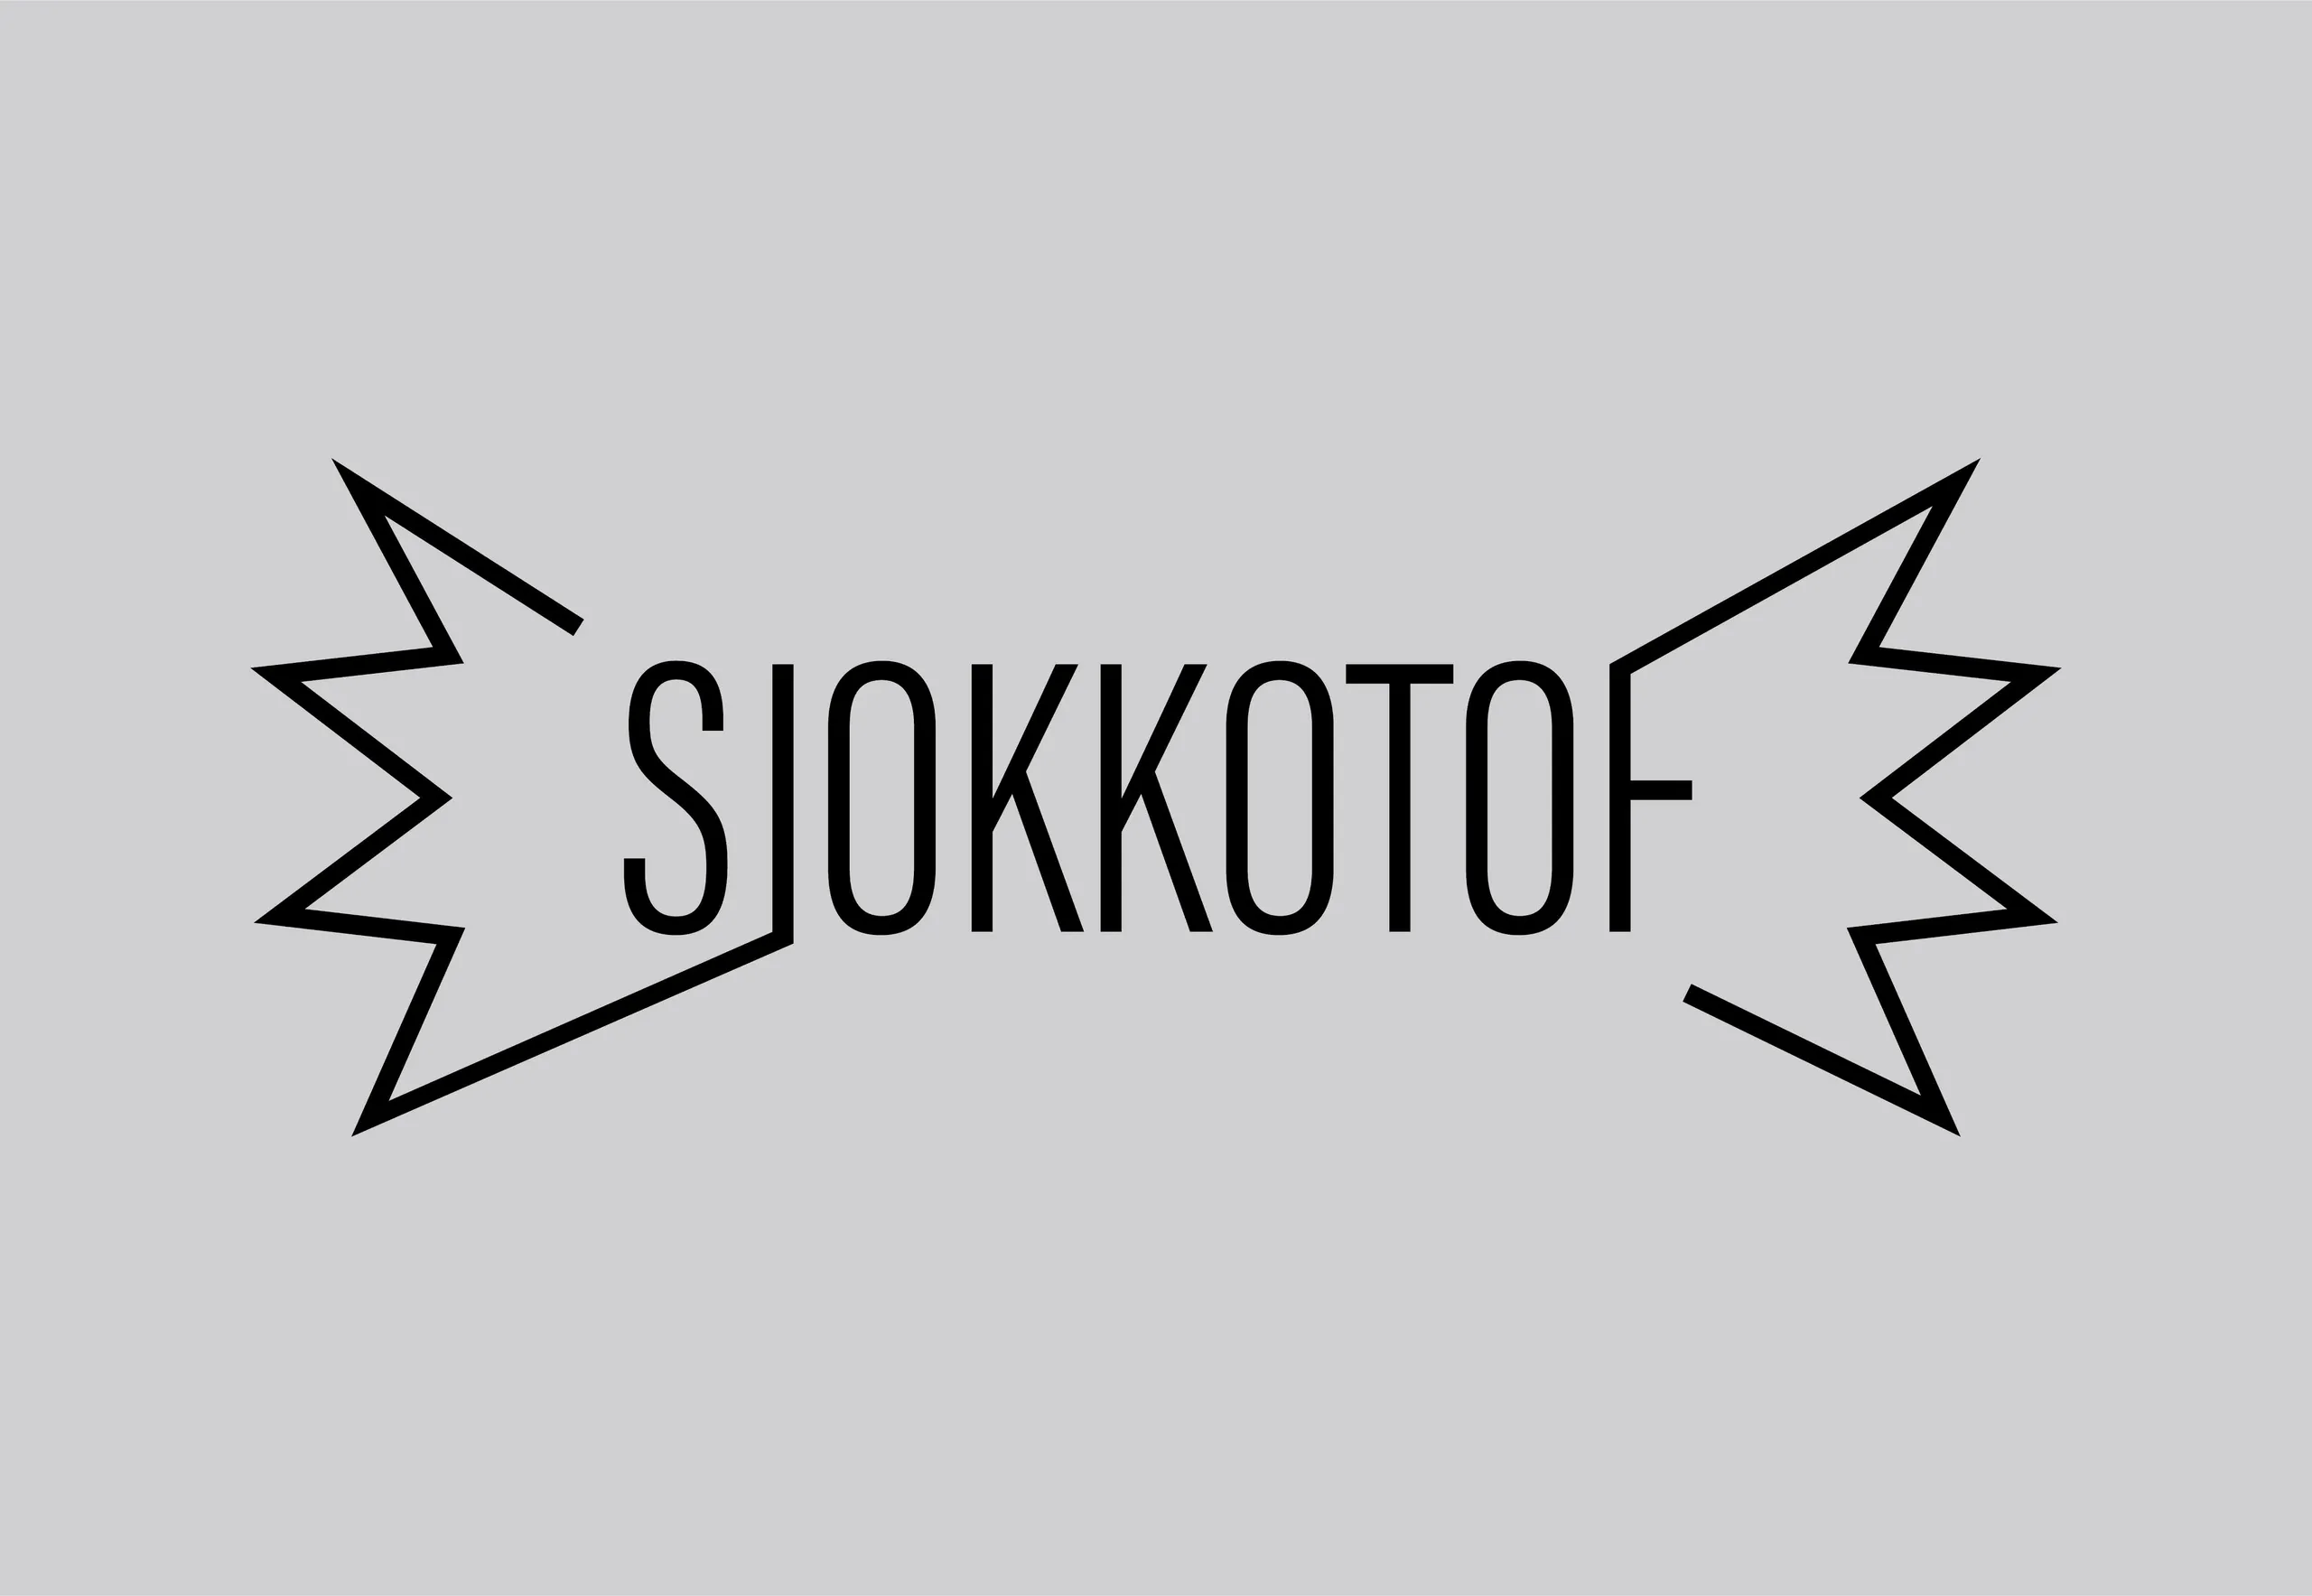 image of the sjokkotof logo